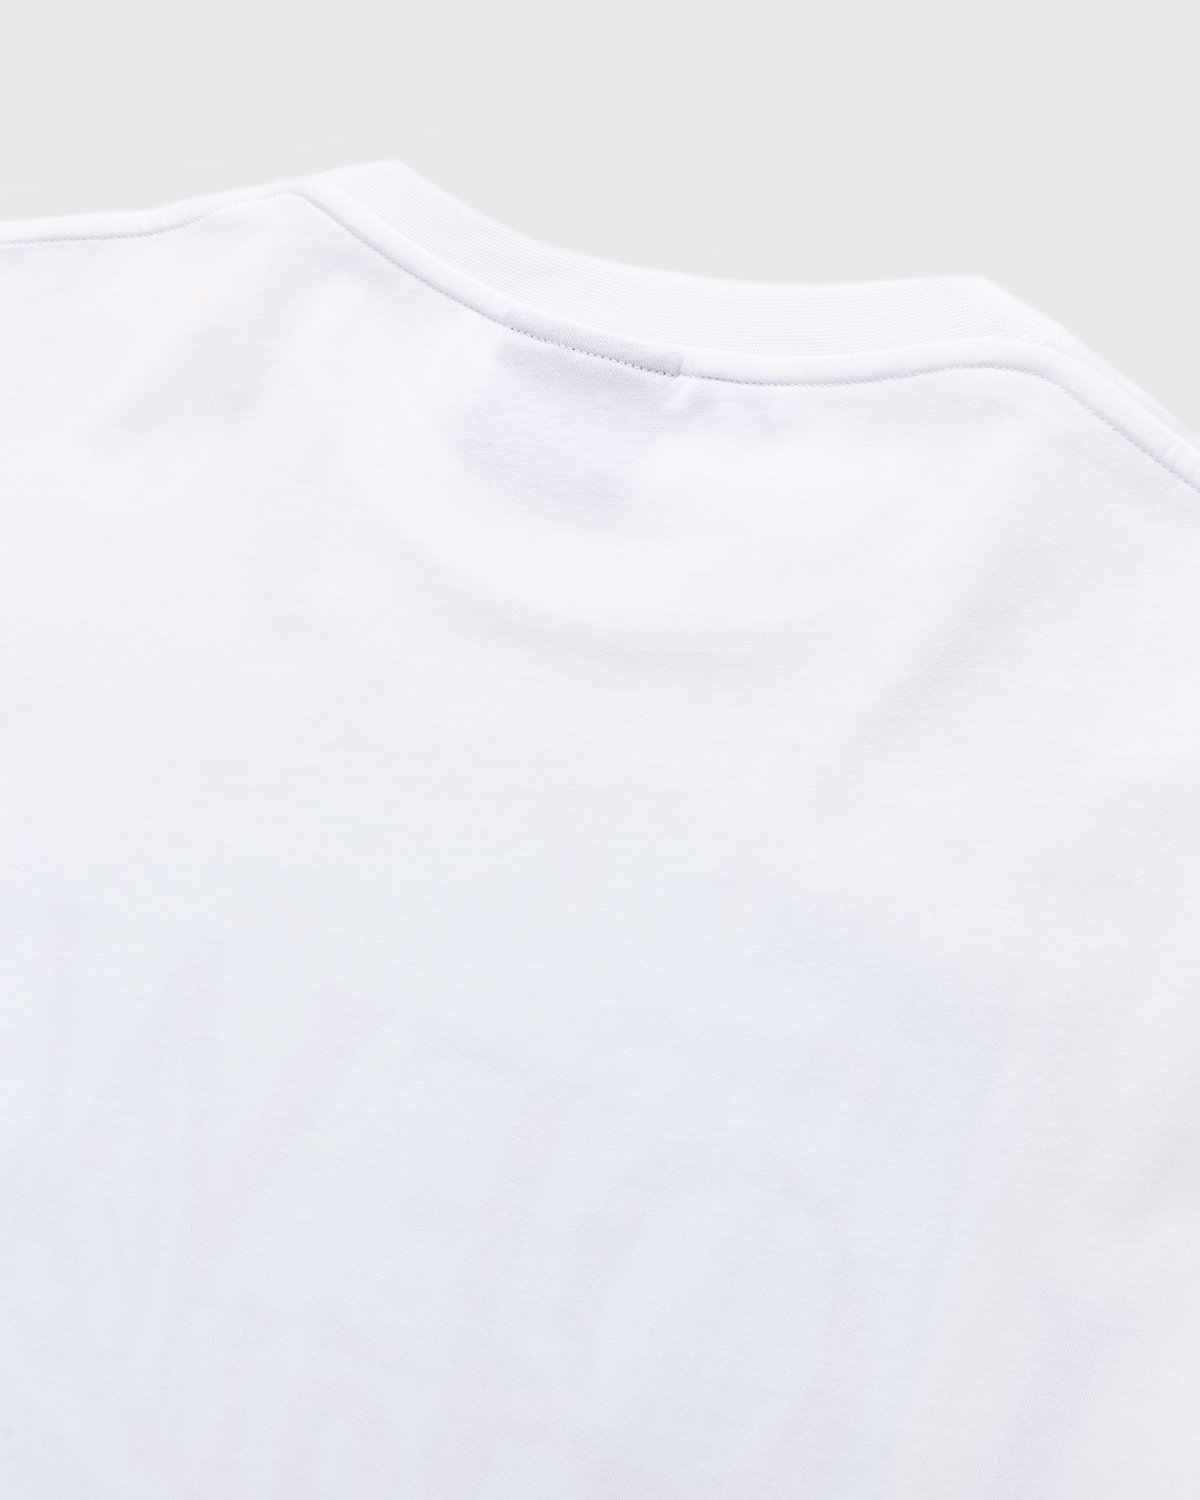 Loewe - Paula's Ibiza Palm Print T-Shirt White/Multi - Clothing - Multi - Image 5